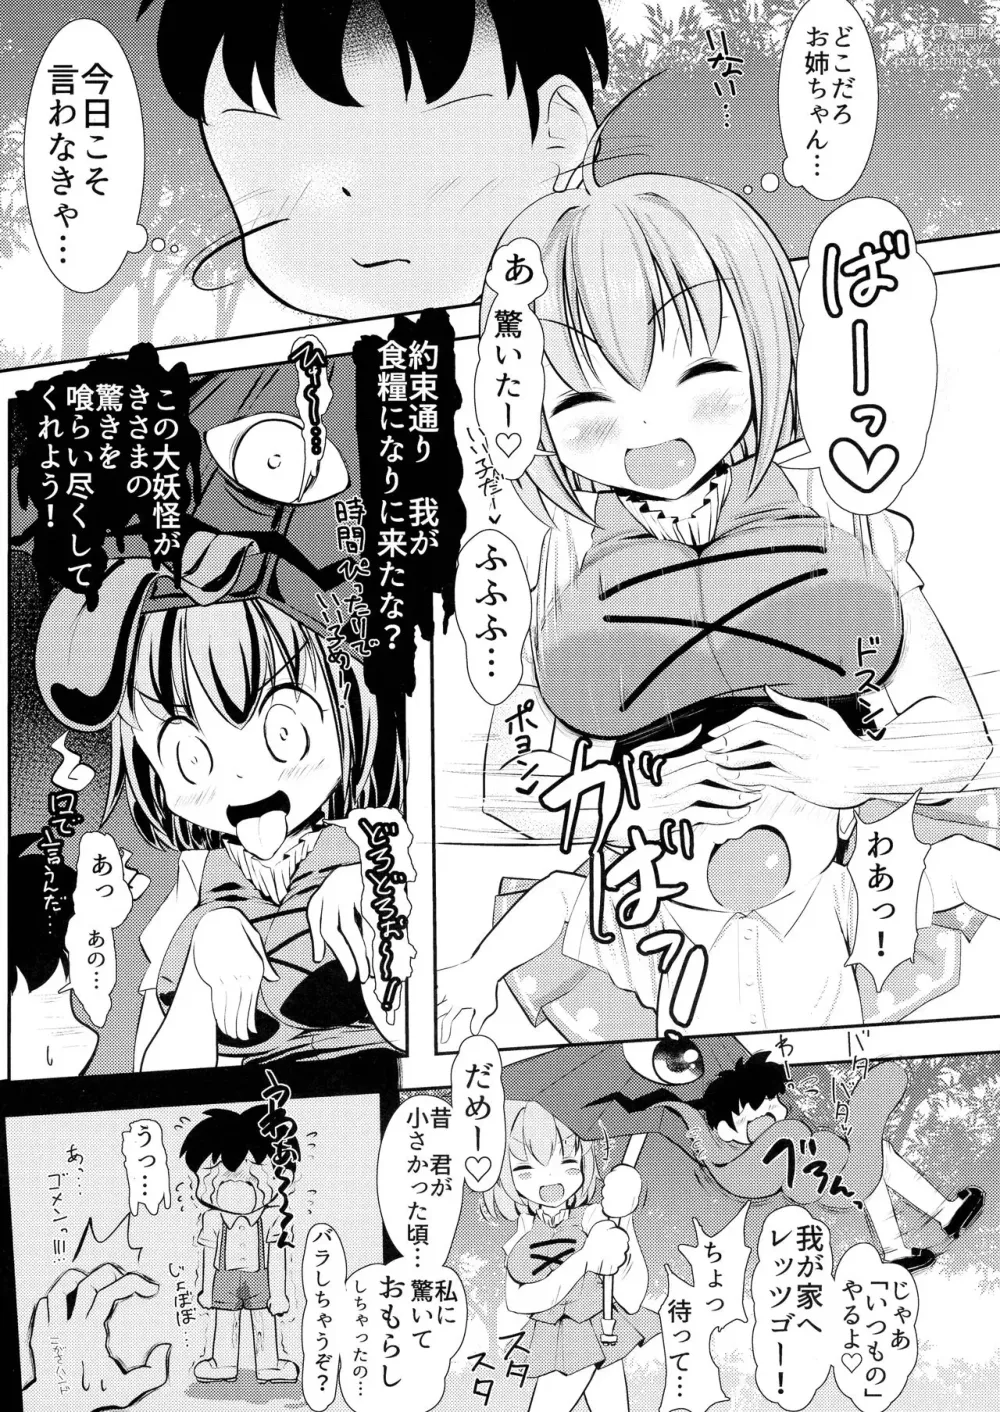 Page 3 of doujinshi Wachiki wa Bonyuu de Bonyuu Youkai 2 Kyoui de Kei ina Kyoui no Tatara Sensei!